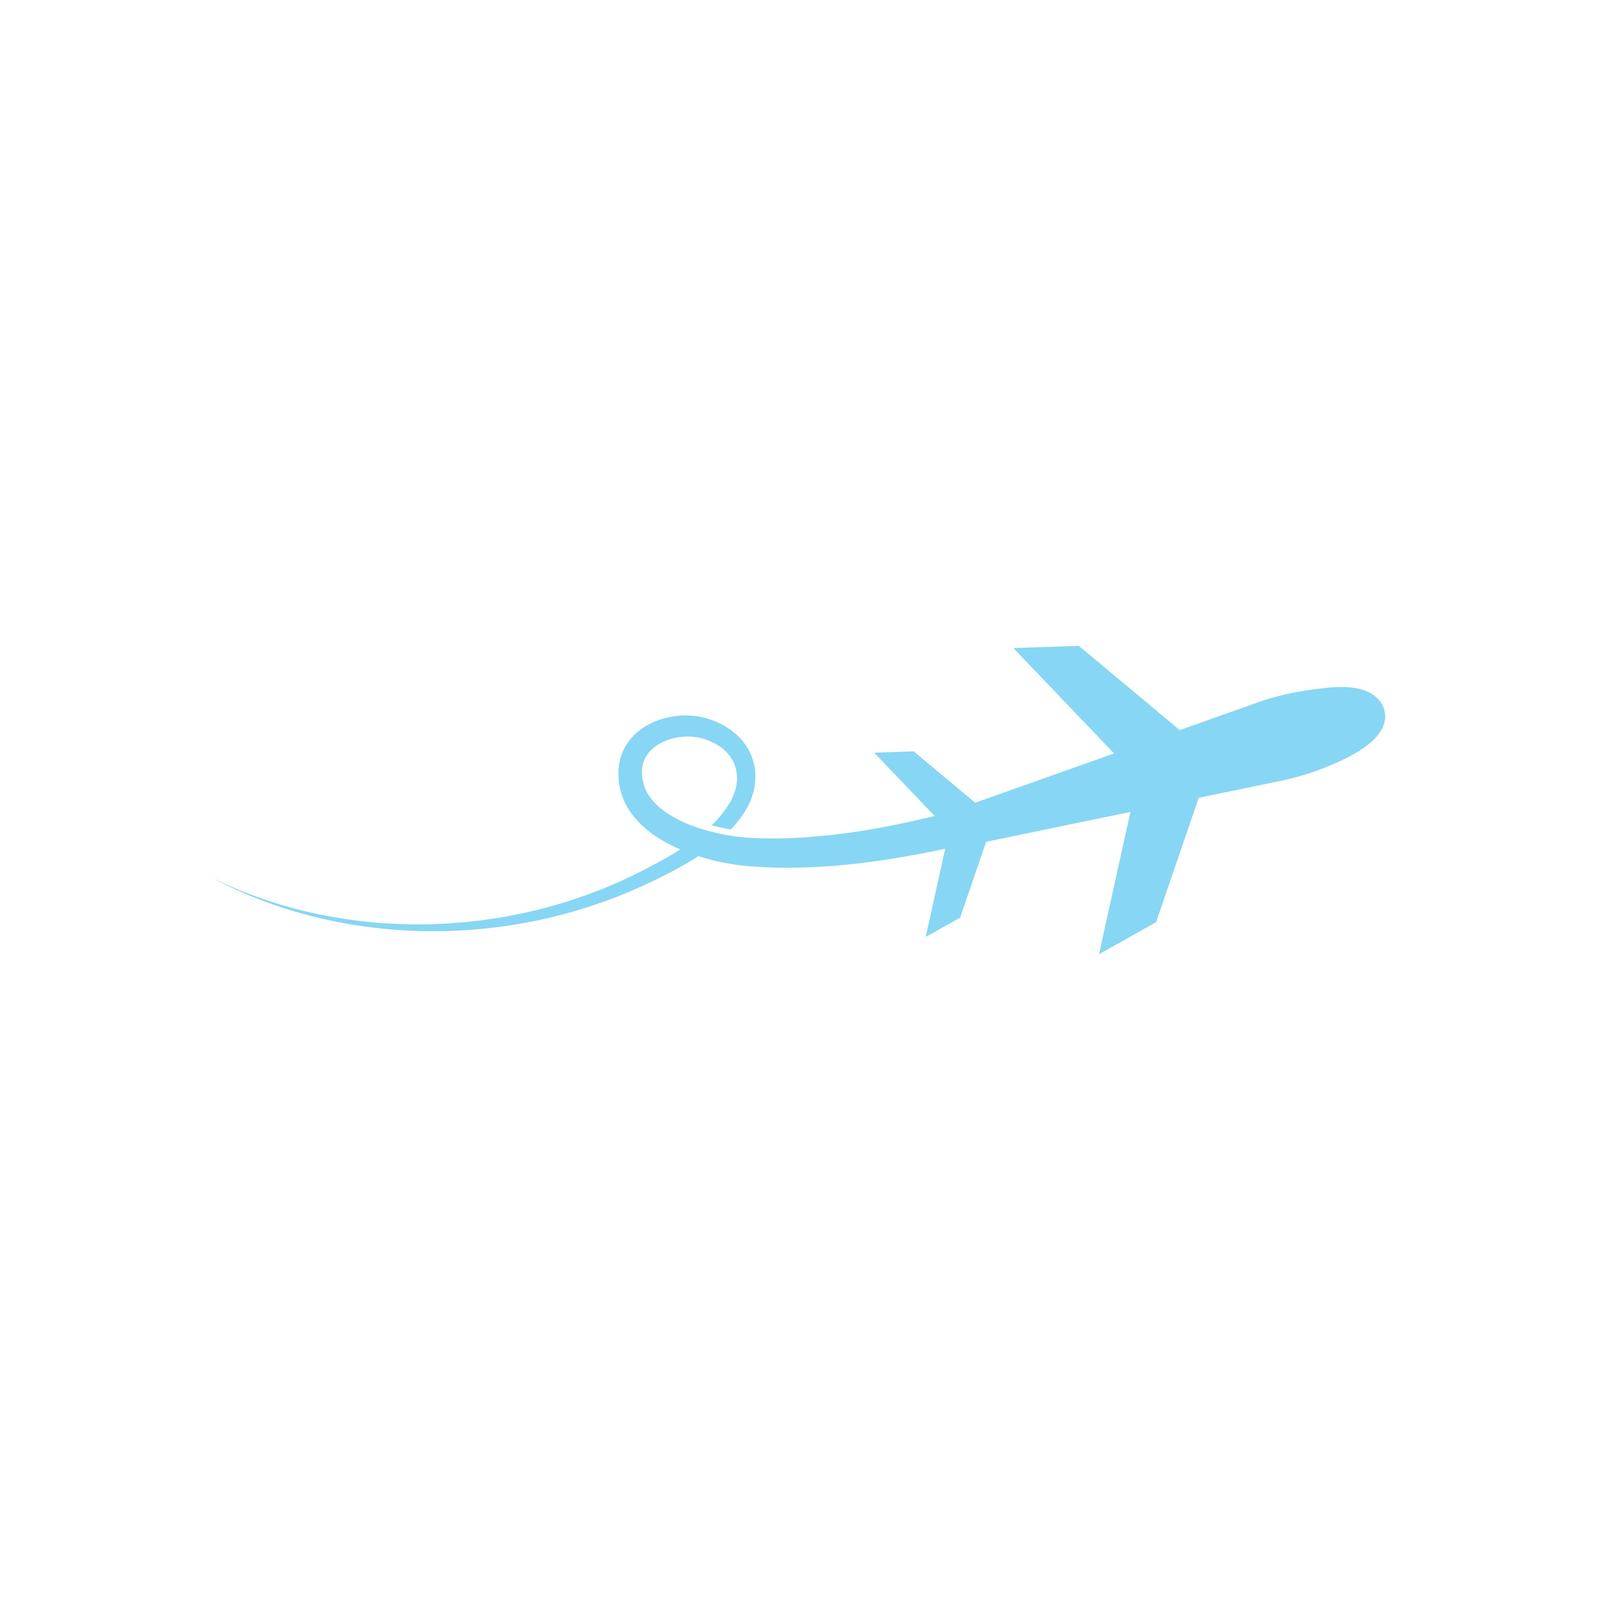 Airplane illustration logo vector design